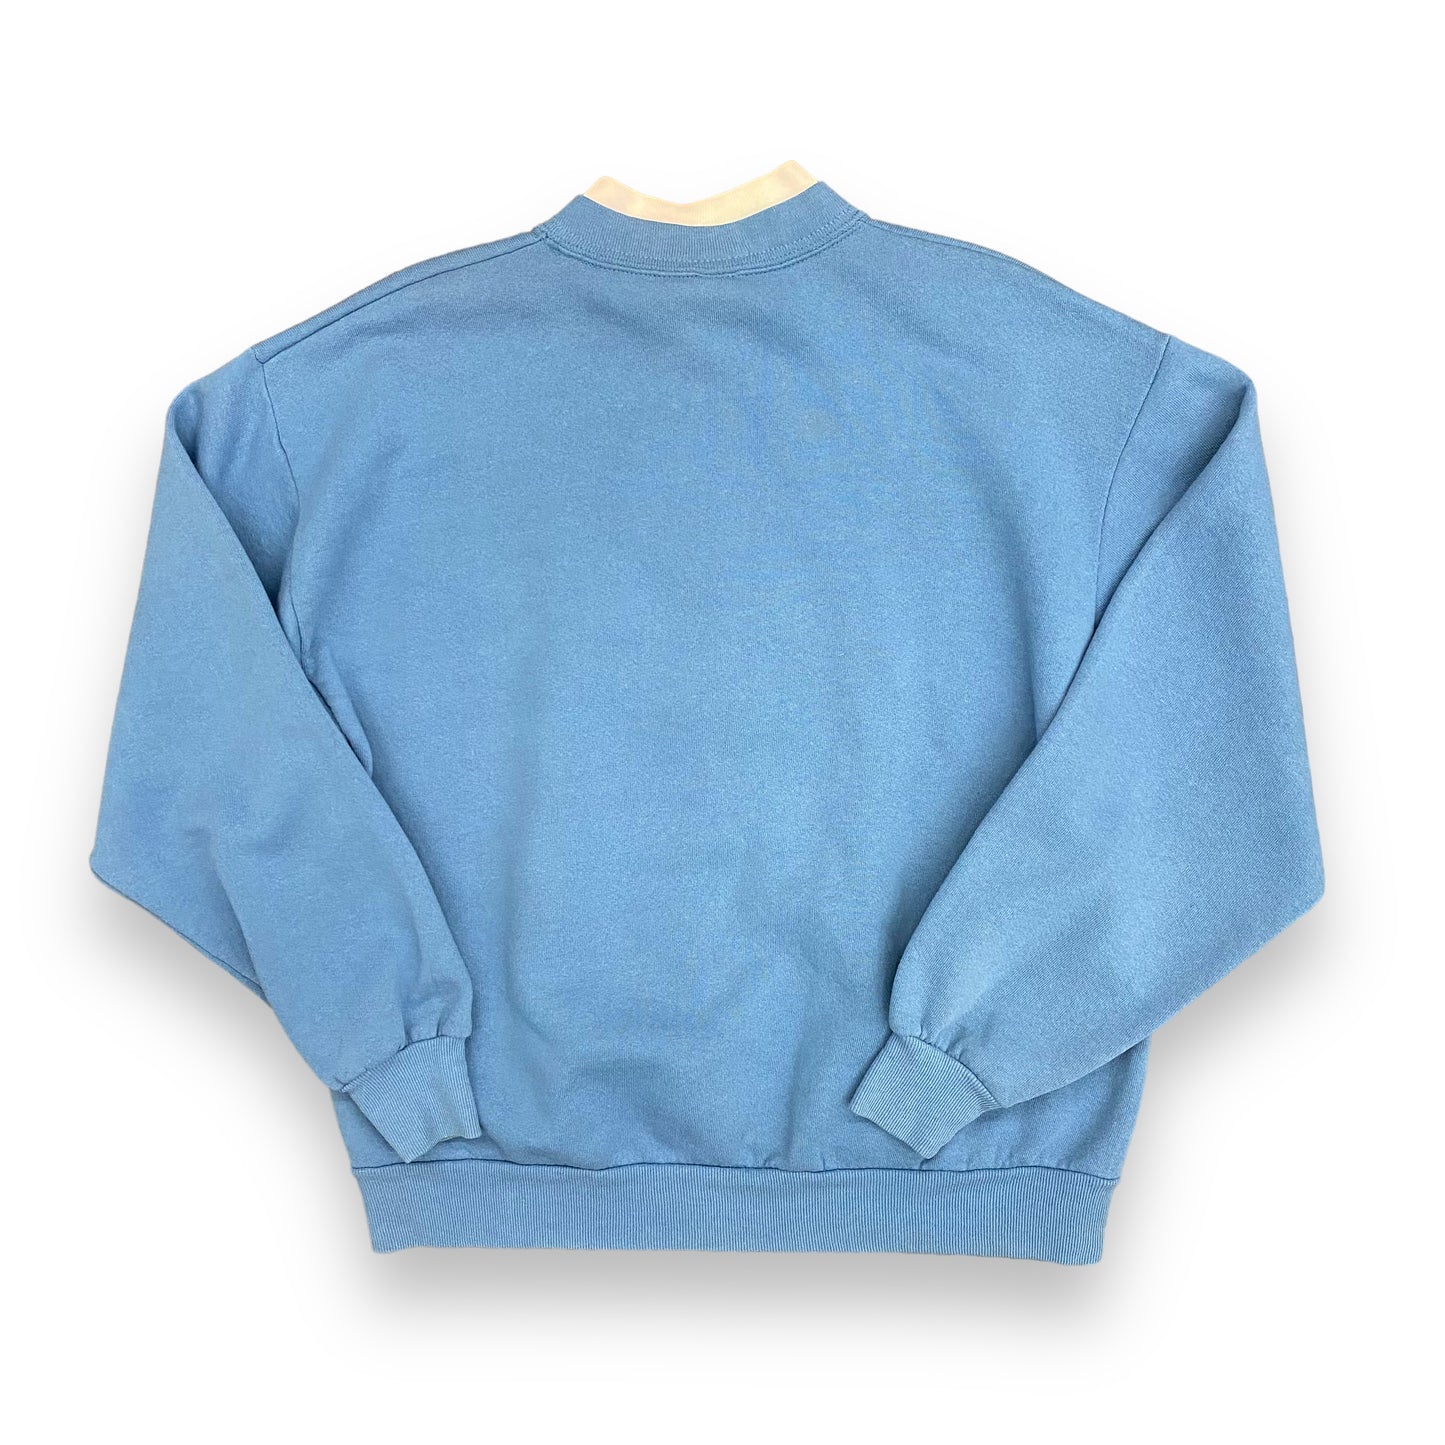 Vintage 1990s Noah's Ark Double Collar Sweatshirt - Size Large